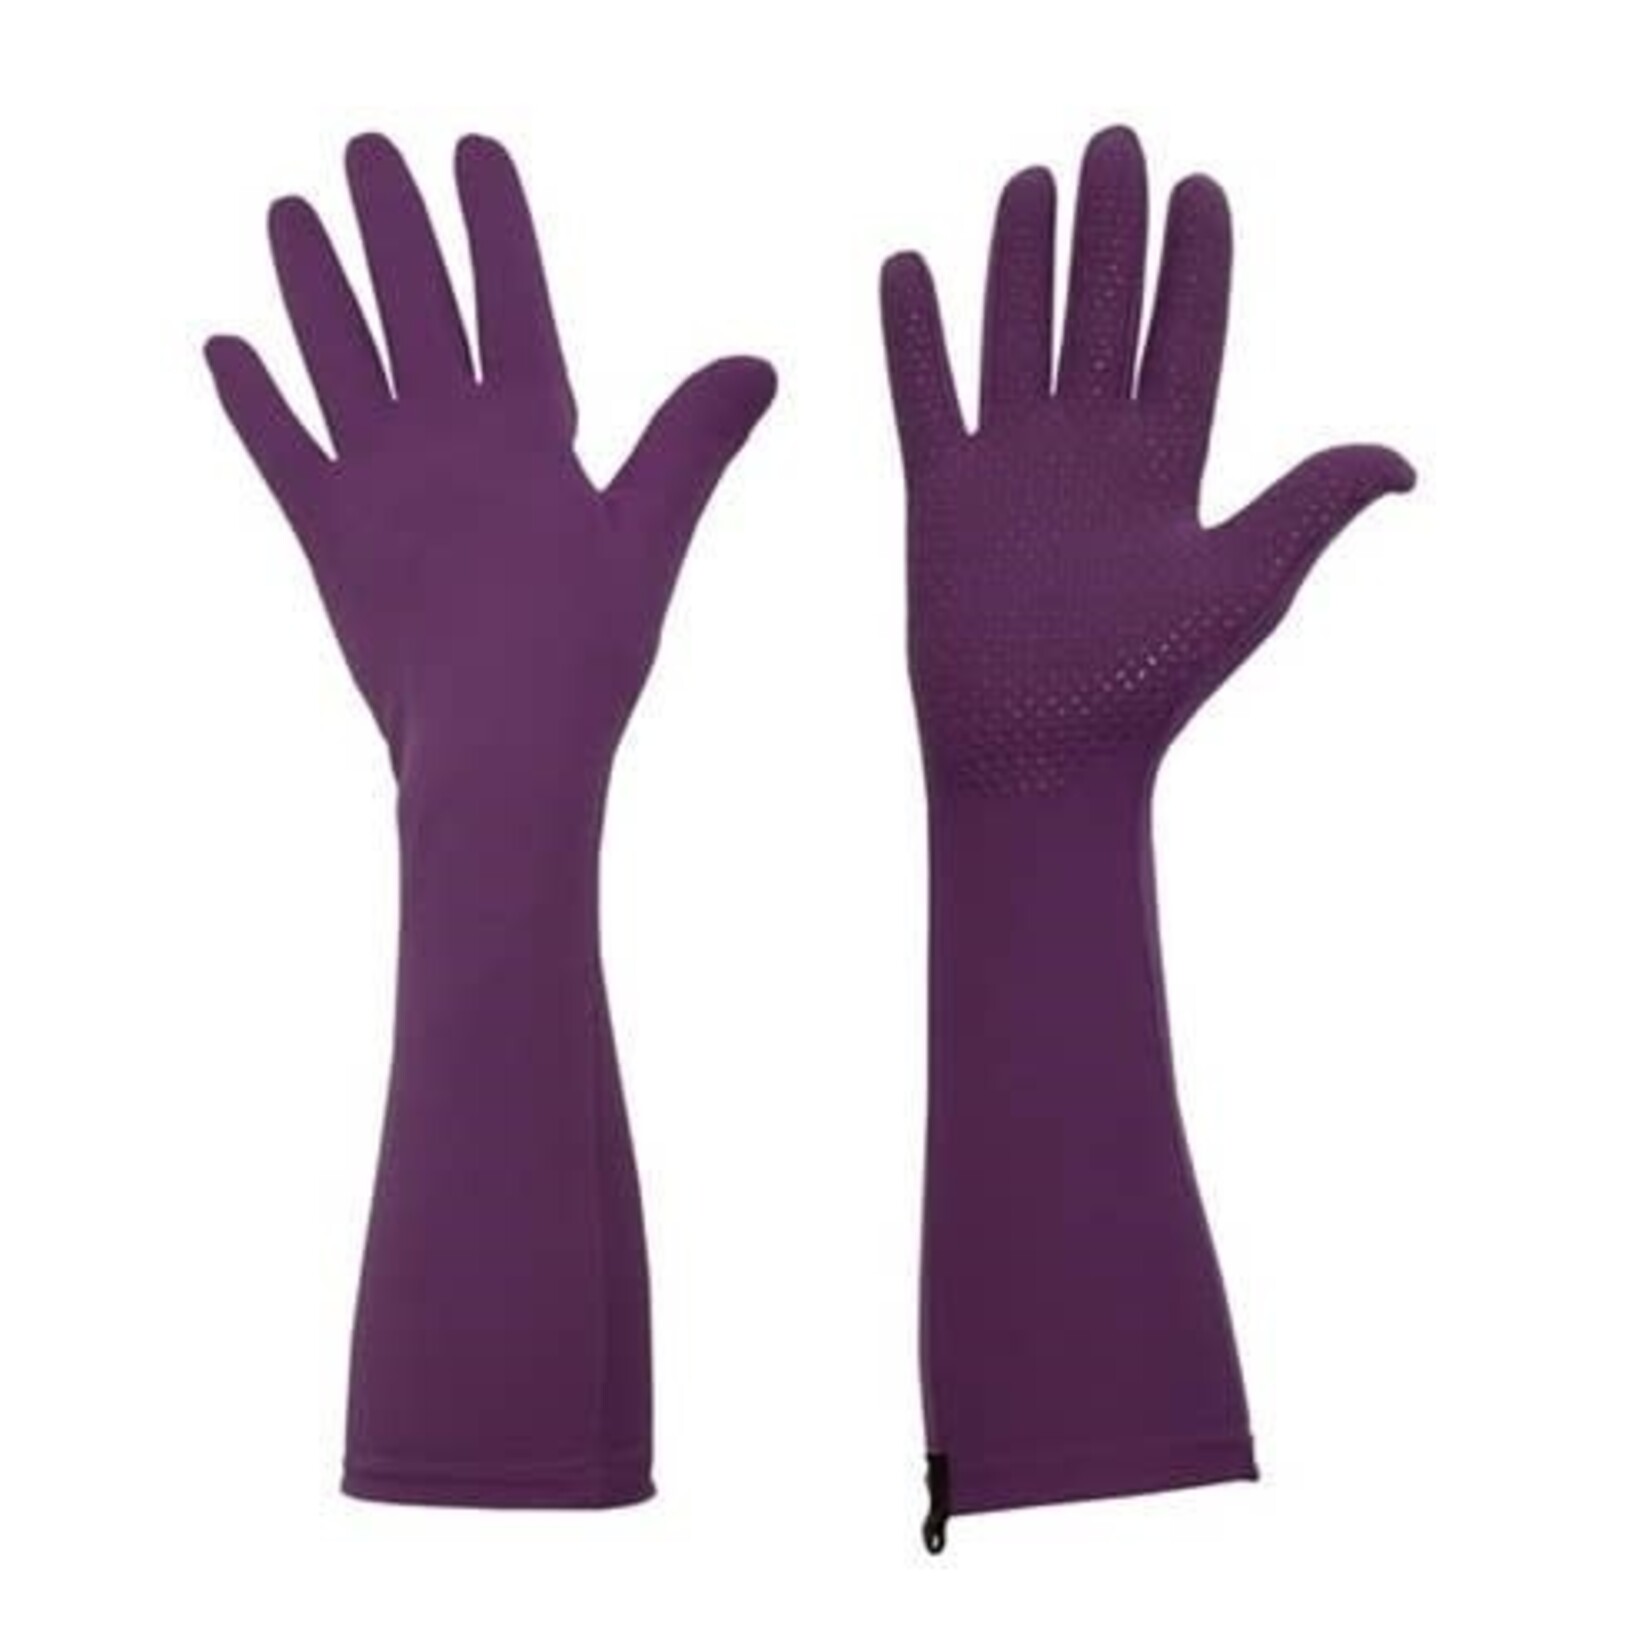 Foxgloves Foxgloves Long Gardening Gloves Elle Grip in Iris